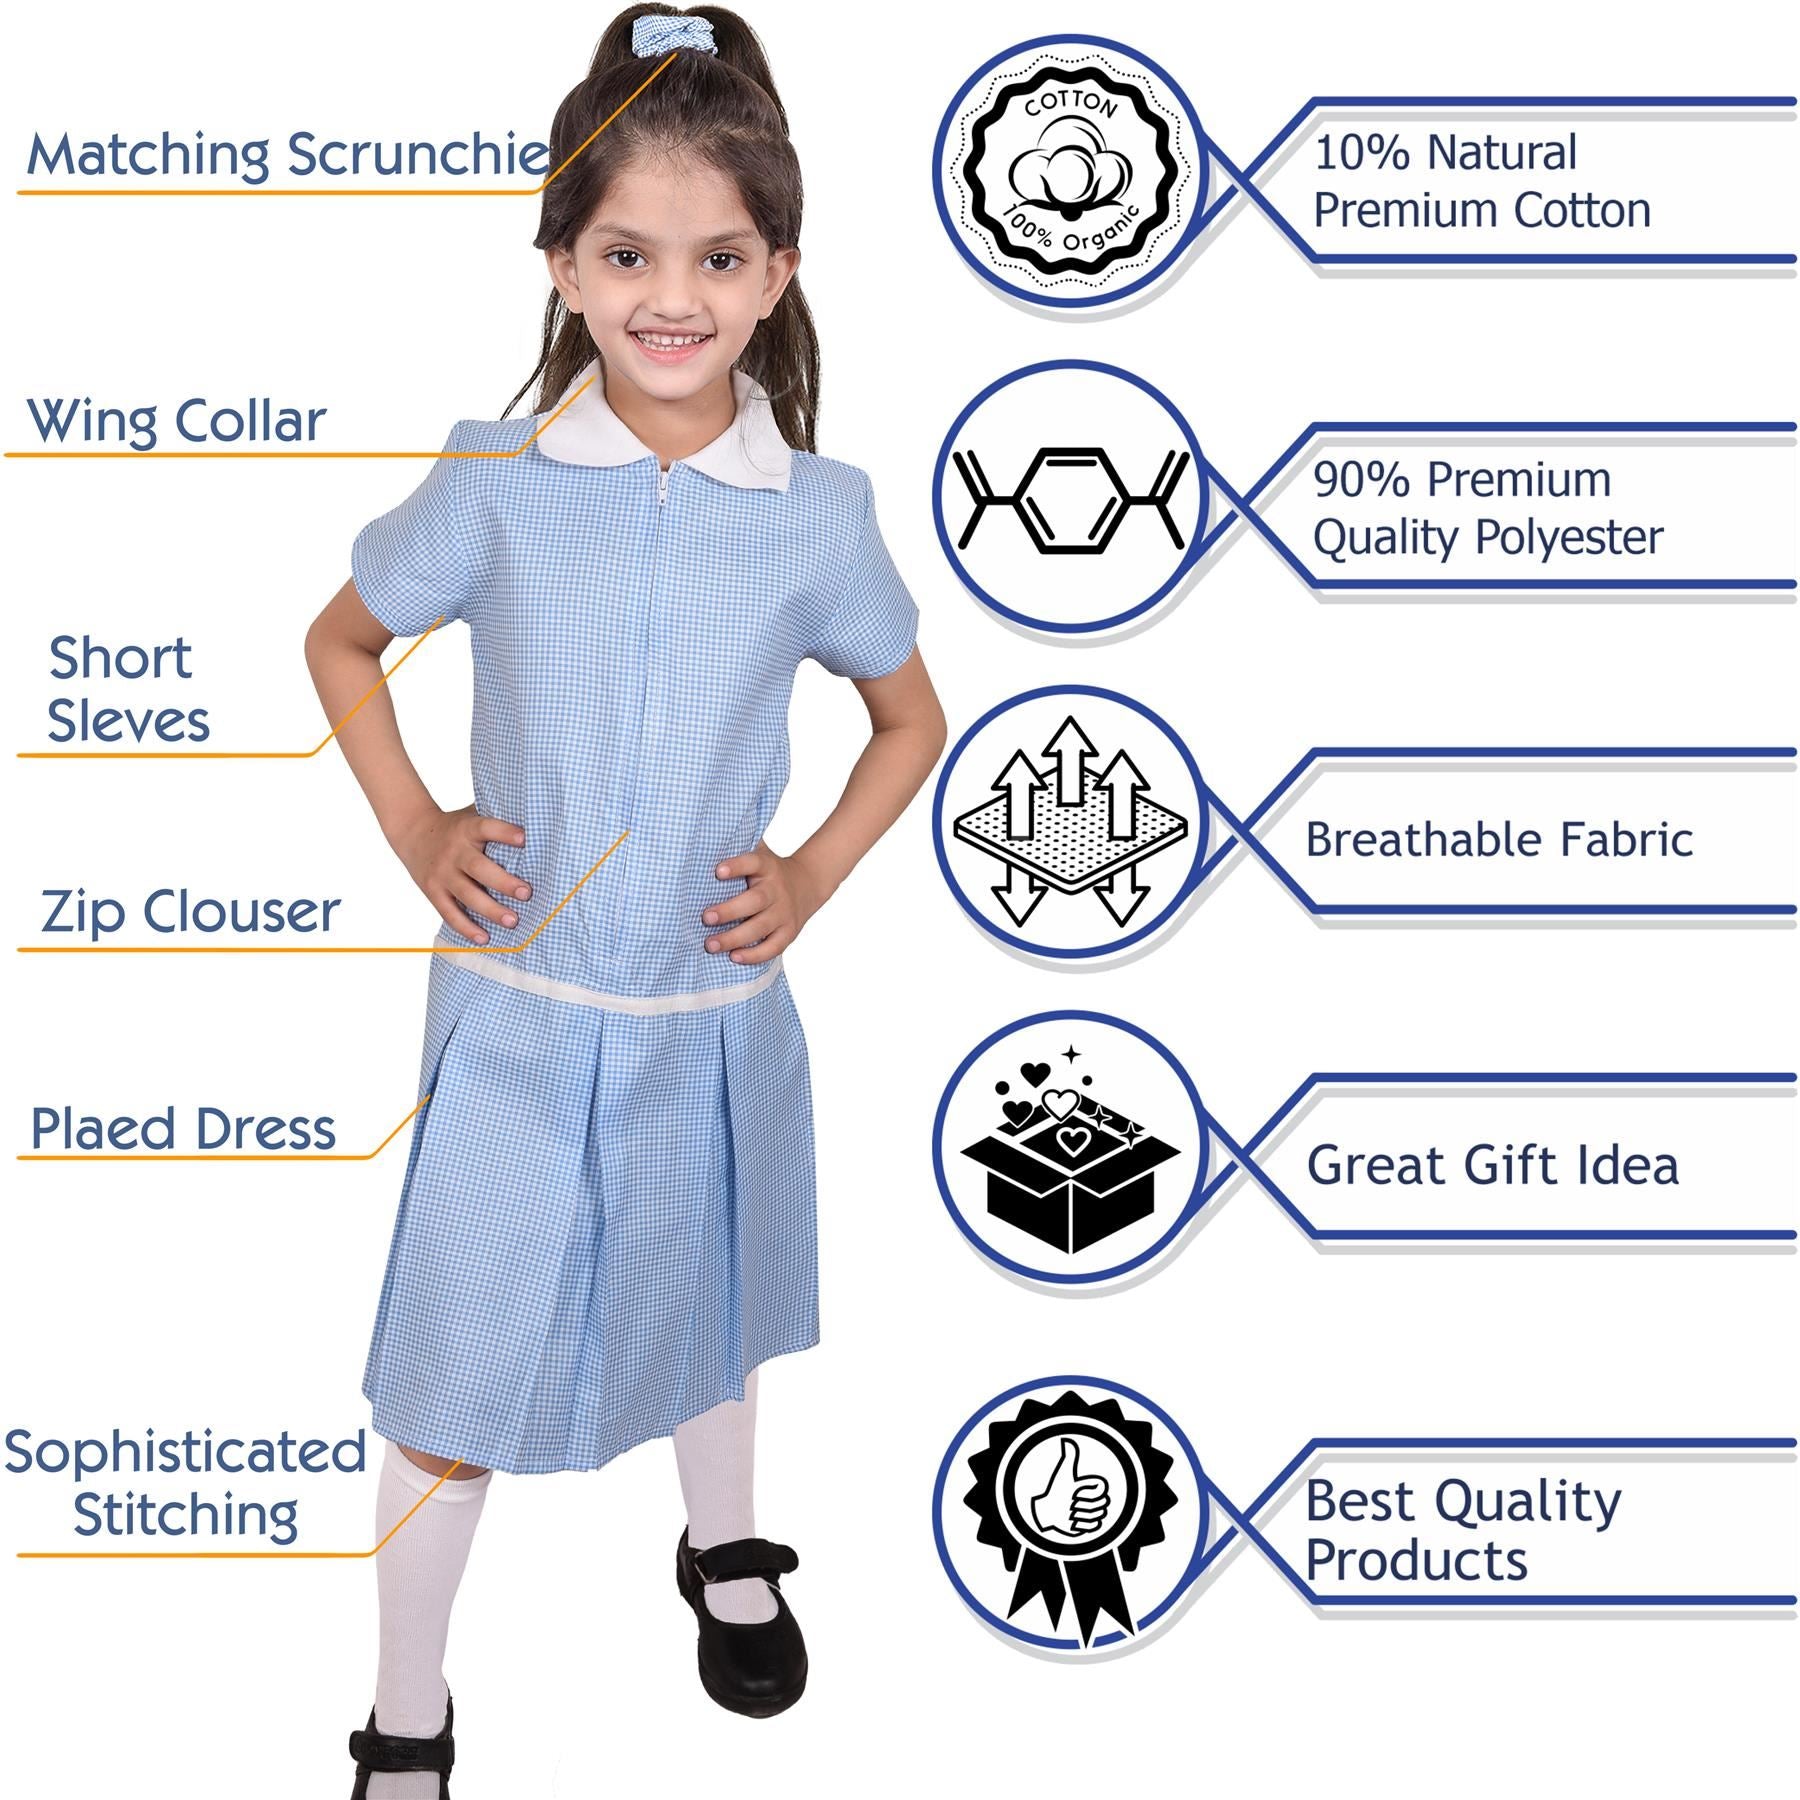 Kids Girls Gingham School Dress Zip Up Check Dresses With Matching Scrunchies